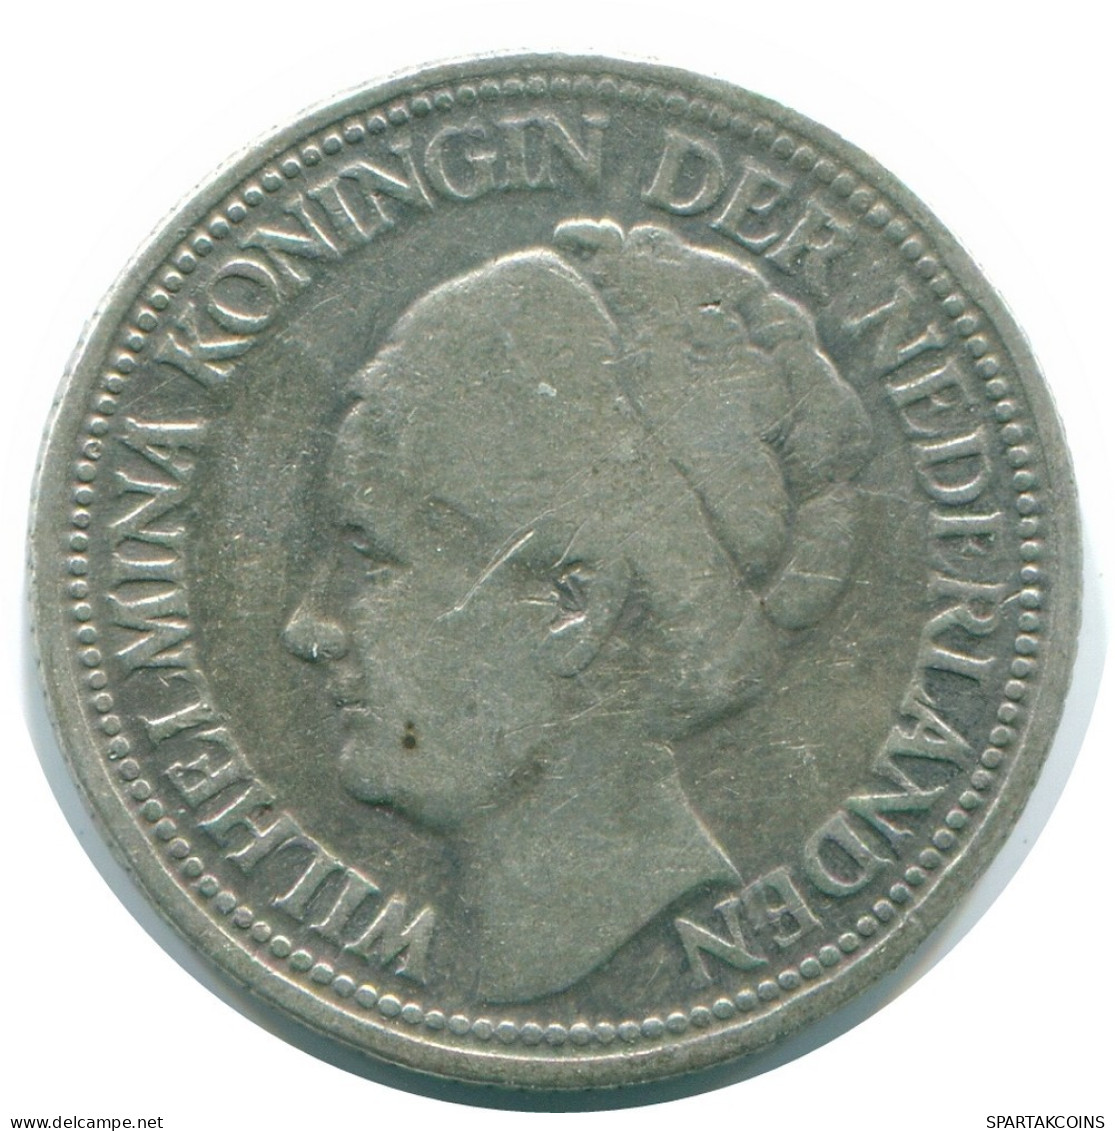 1/4 GULDEN 1947 CURACAO Netherlands SILVER Colonial Coin #NL10732.4.U.A - Curaçao